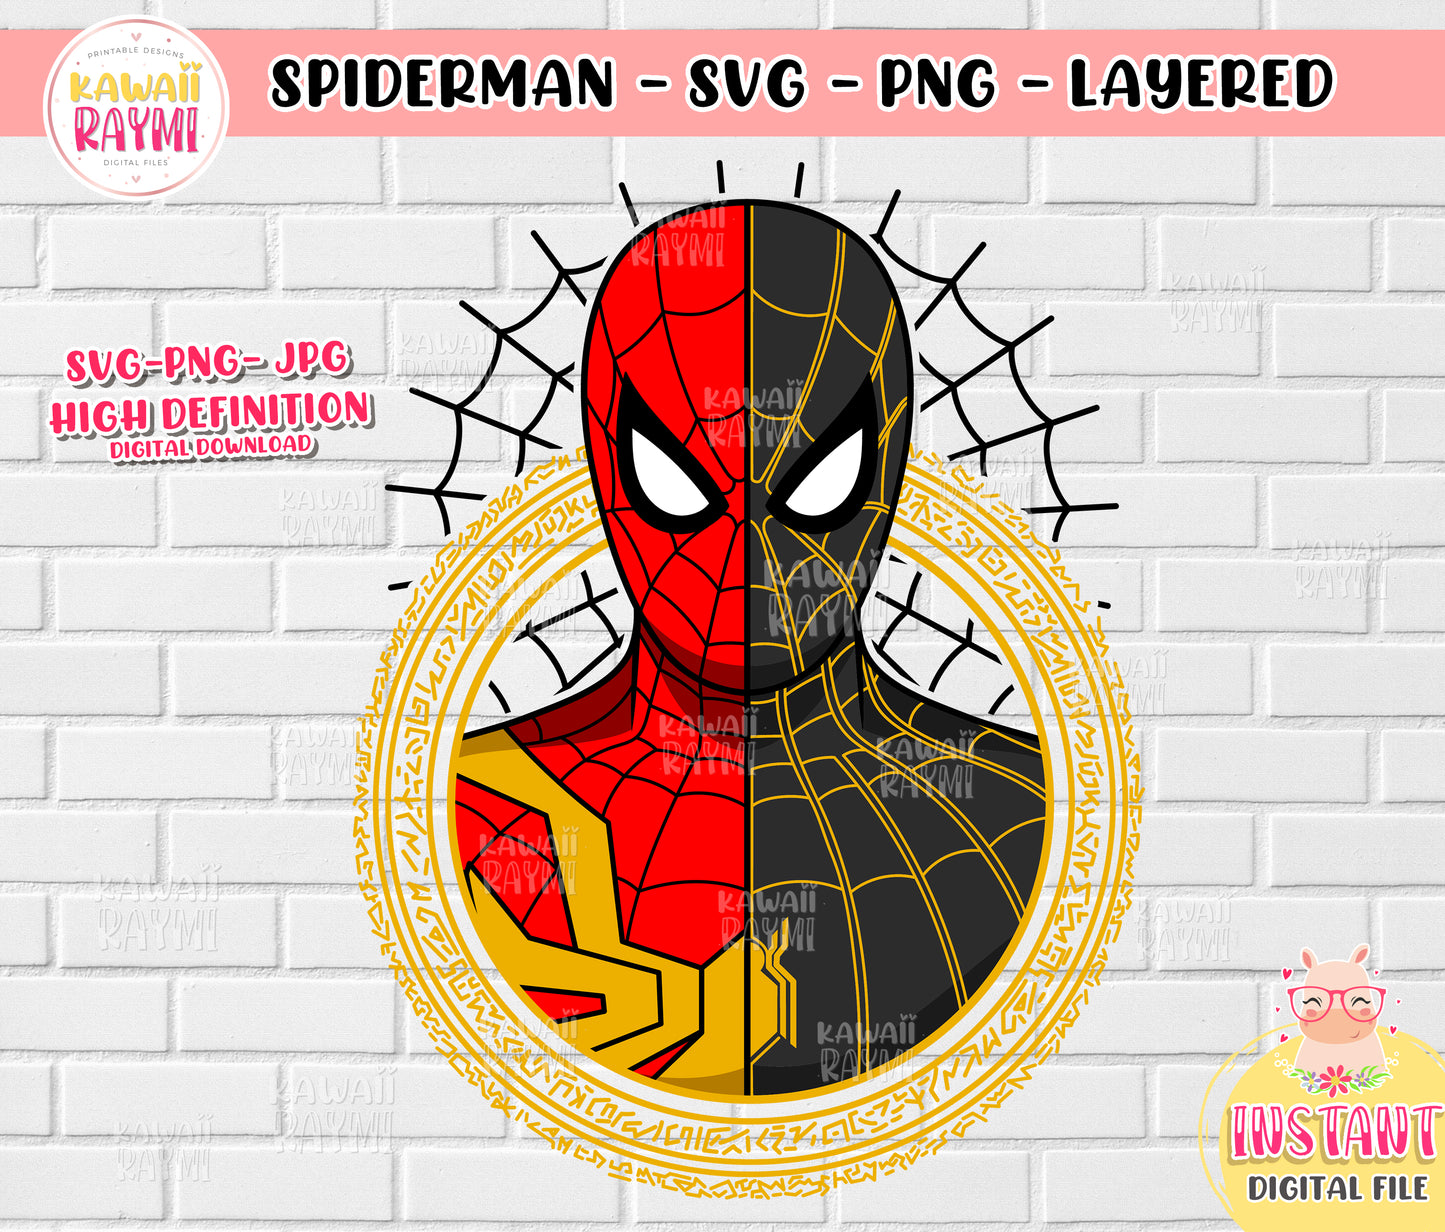 Spiderman svg, spiderman no way home svg, cricut, cut file, png, jpg, layered, sublimation